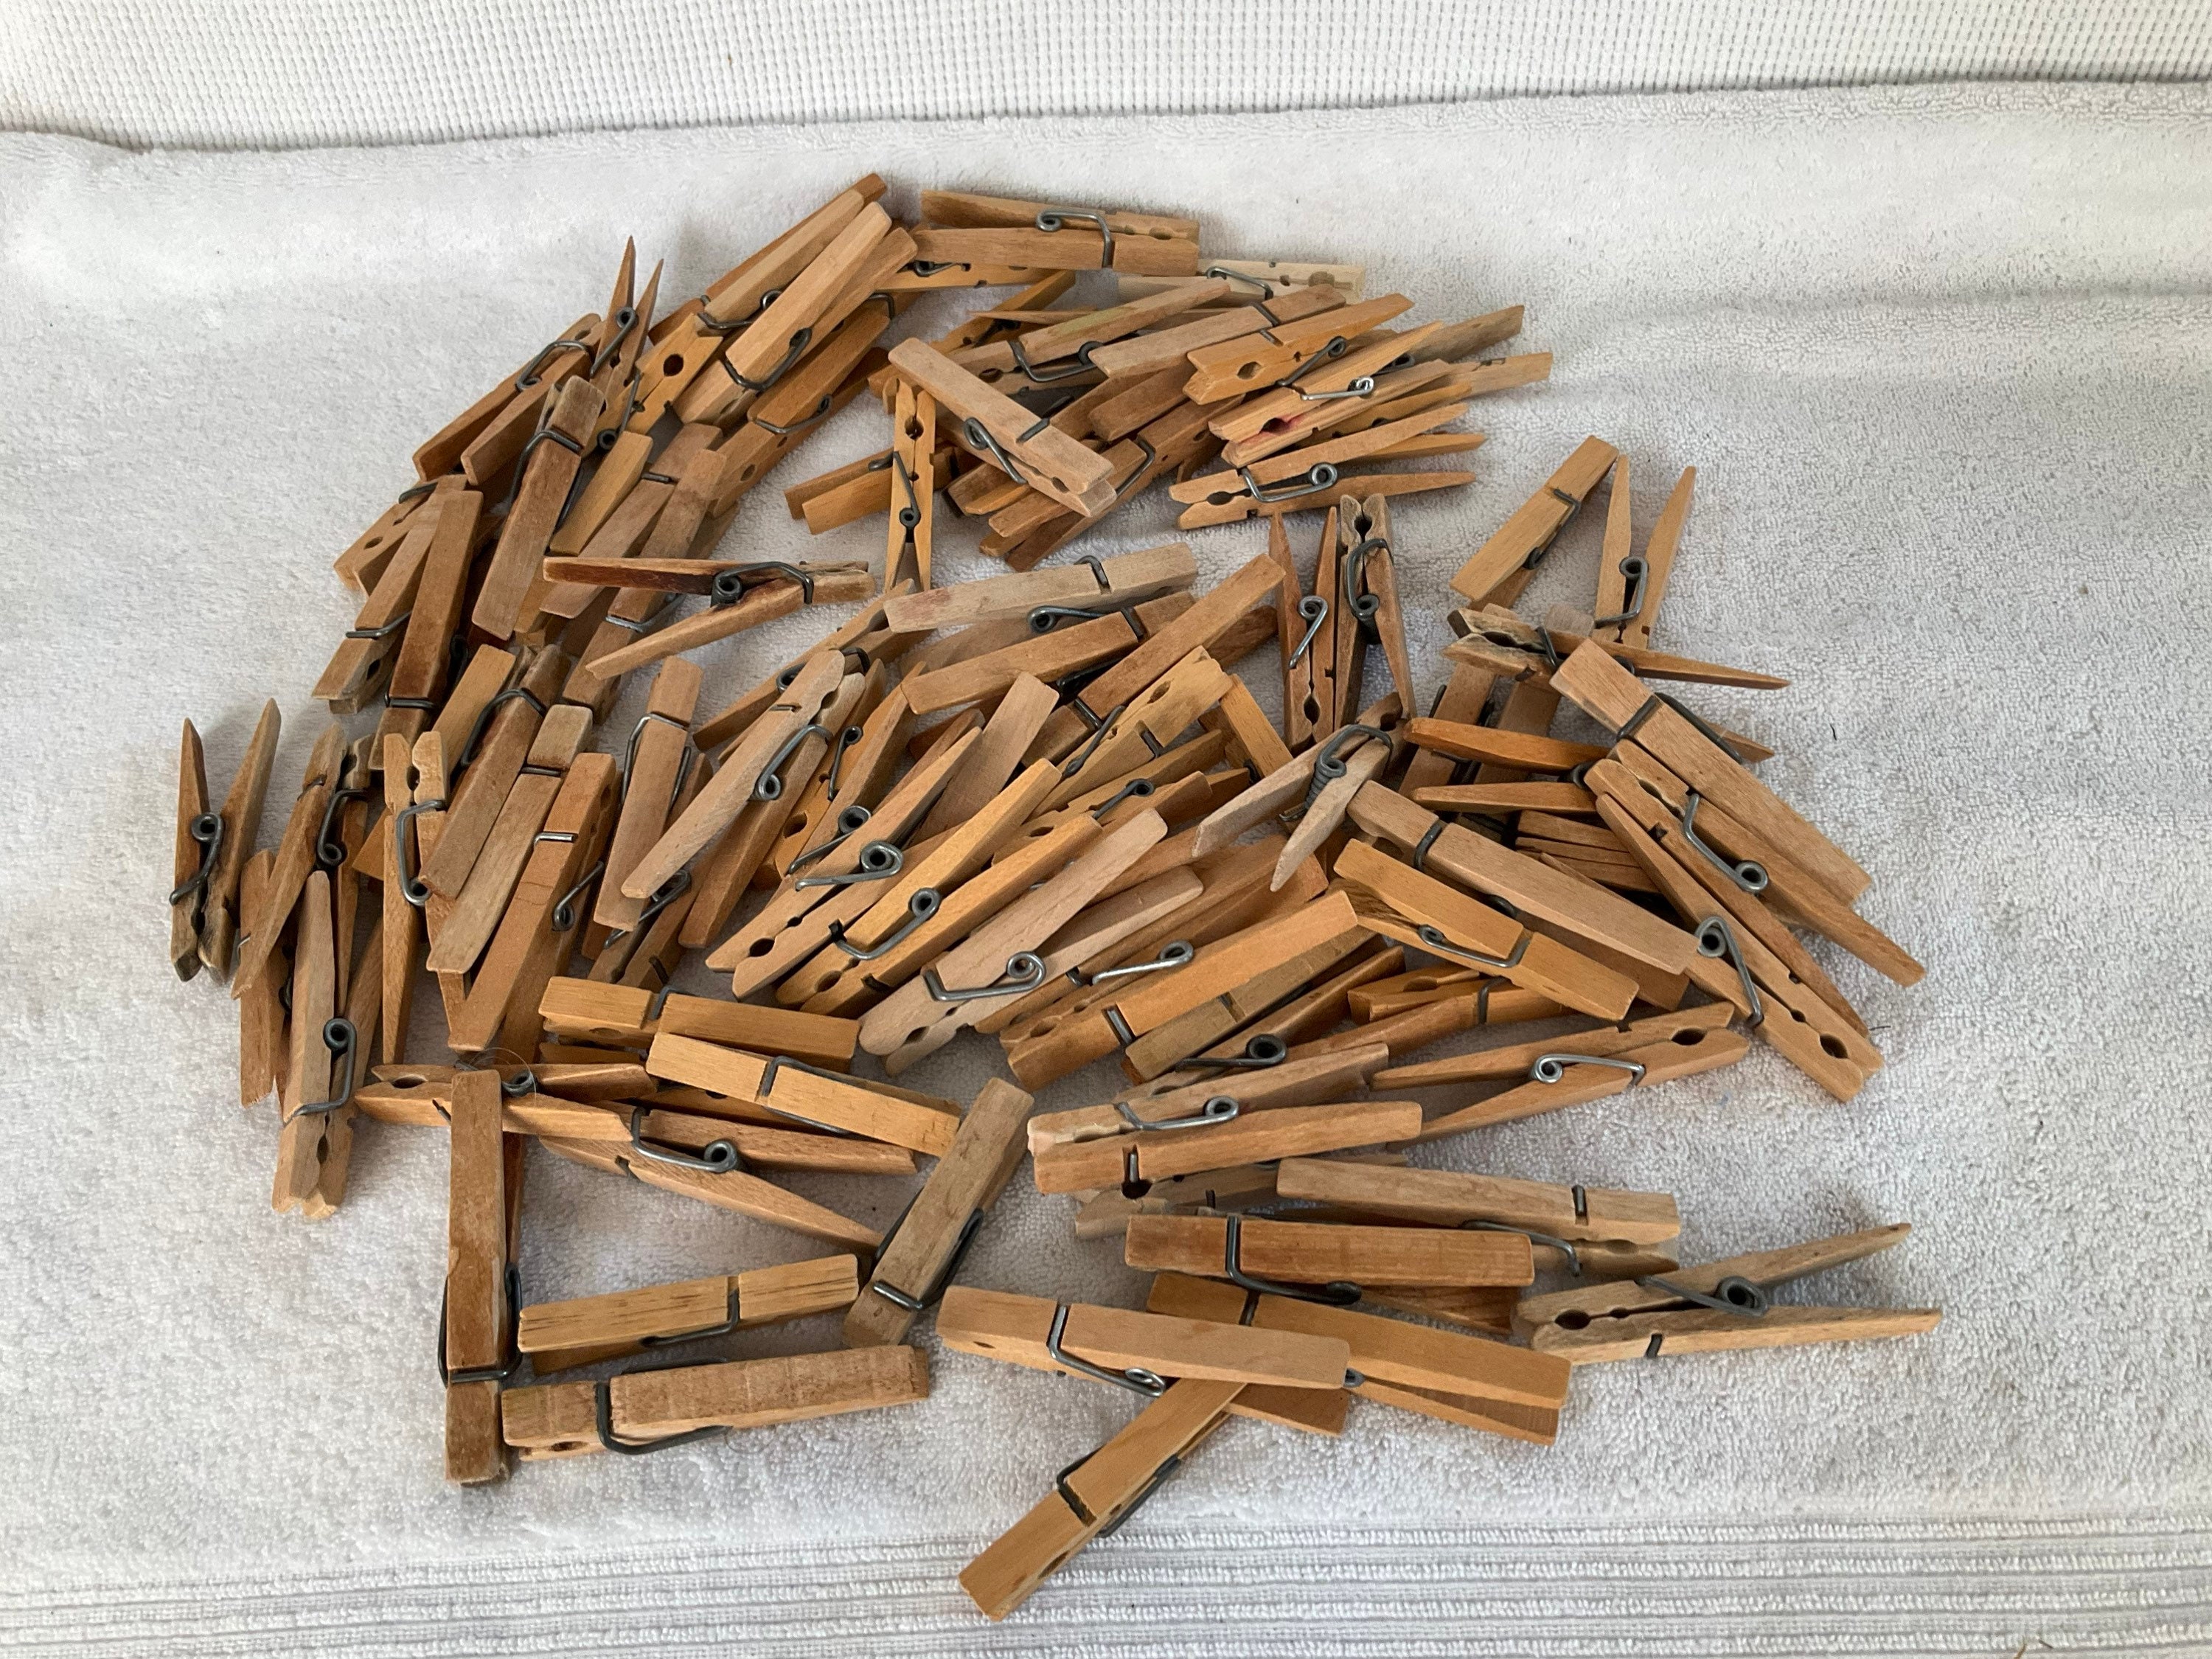 Mini Clothespins, Wood Clothespins, Gold, Tiny Clothespins